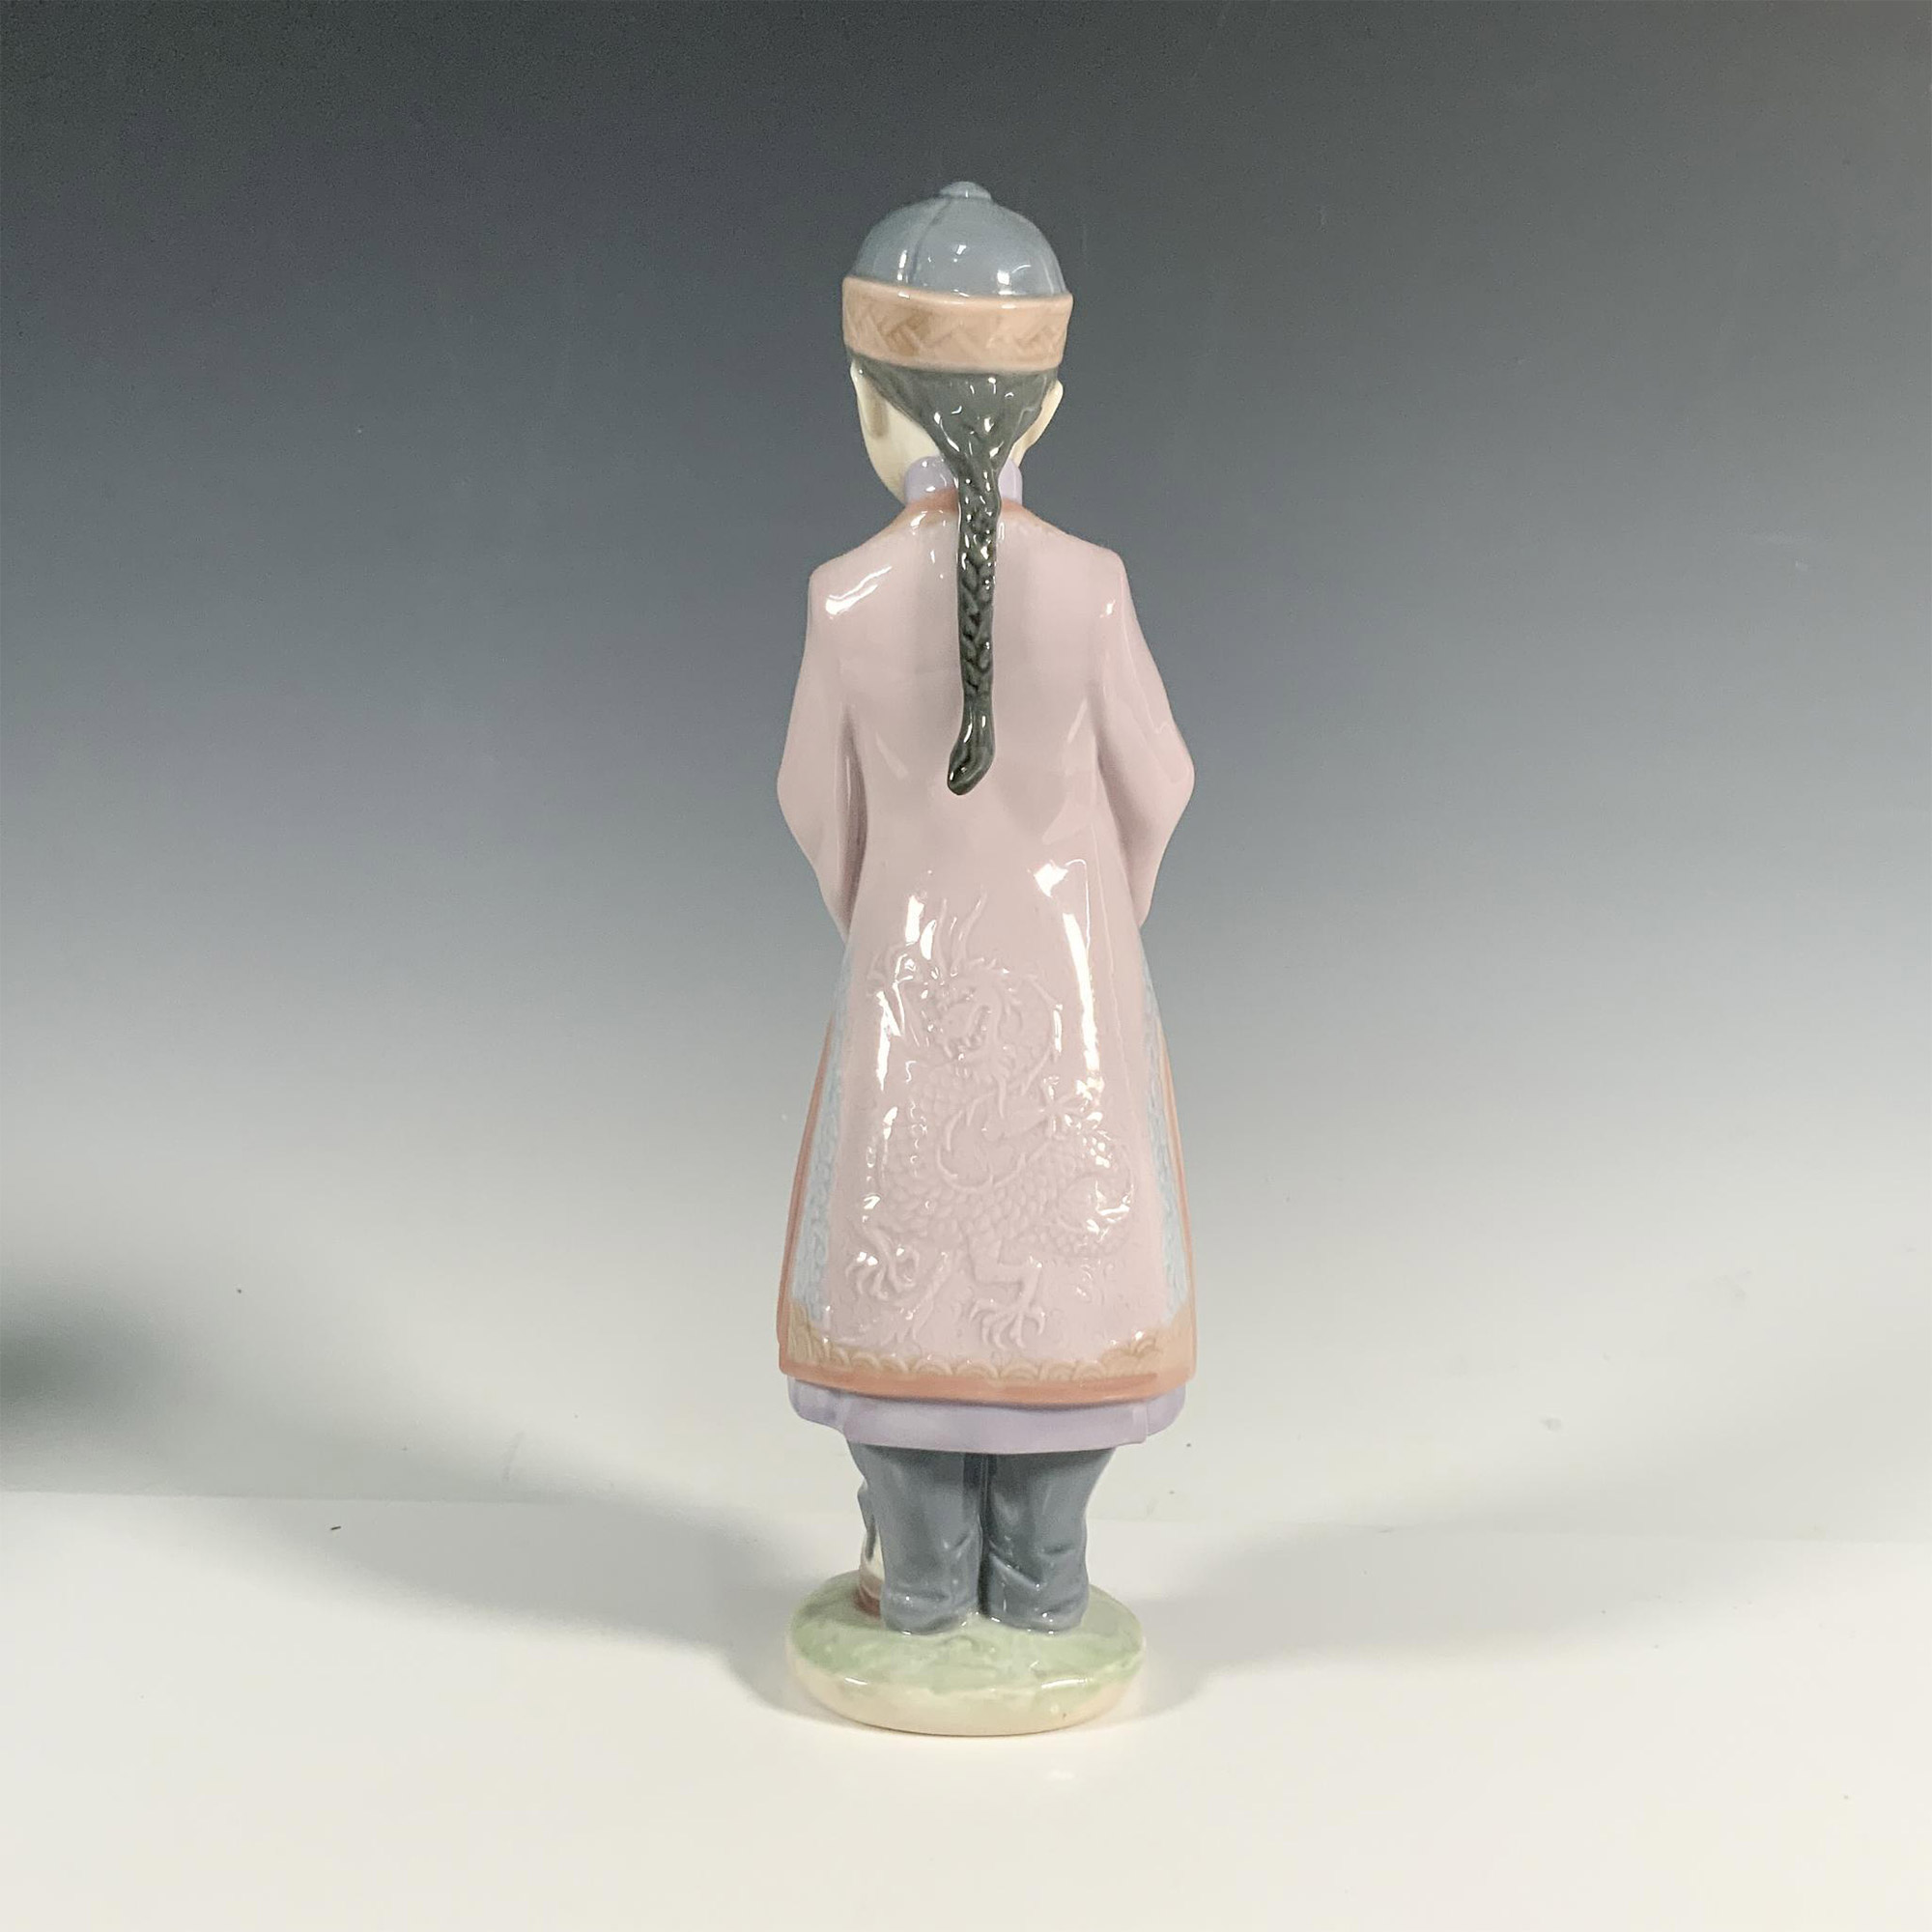 Asian Boy 1006188 - Lladro Porcelain Figurine - Image 2 of 4